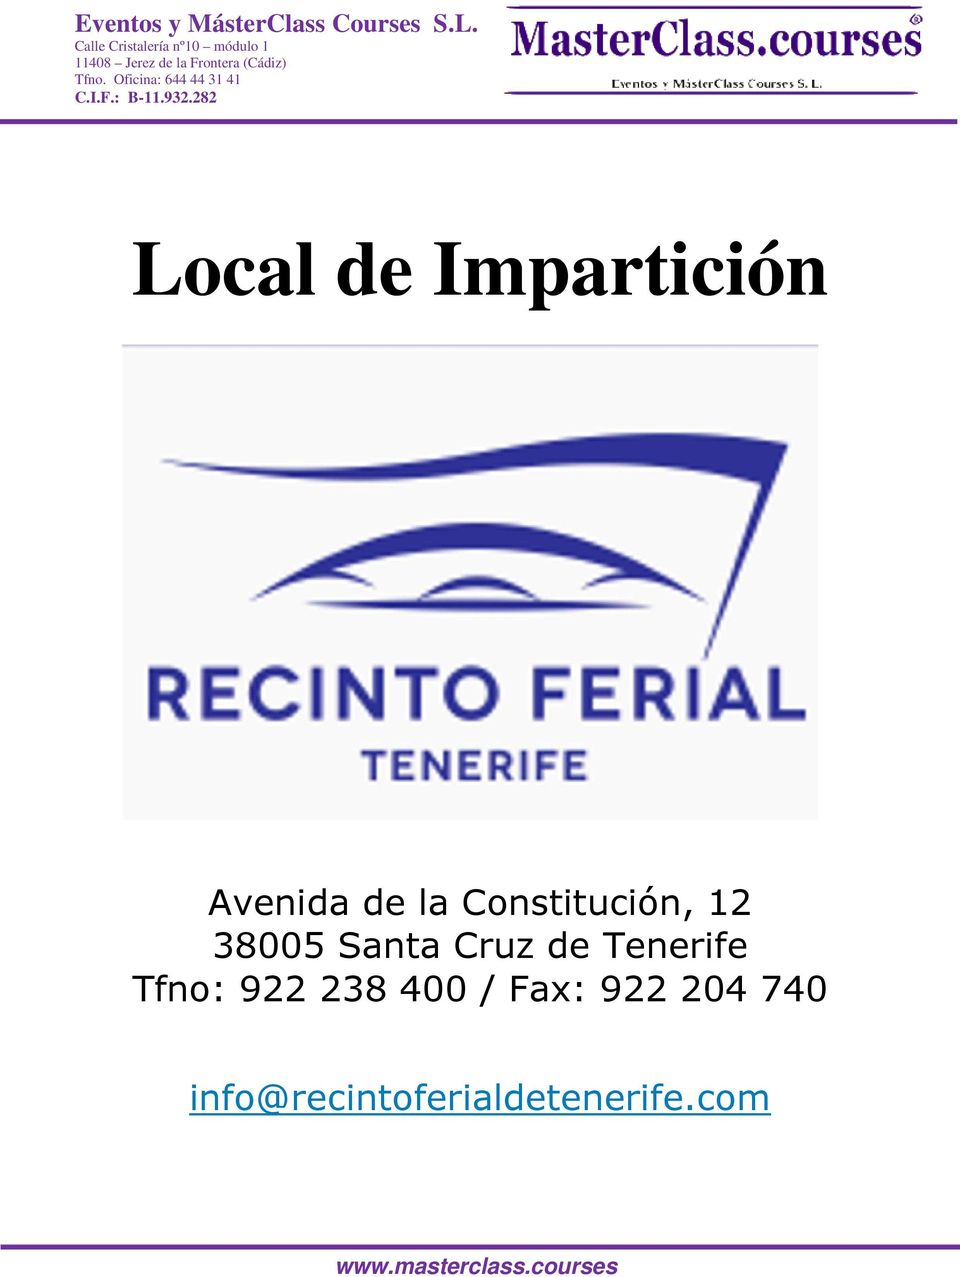 Tenerife Tfno: 922 238 400 / Fax: 922